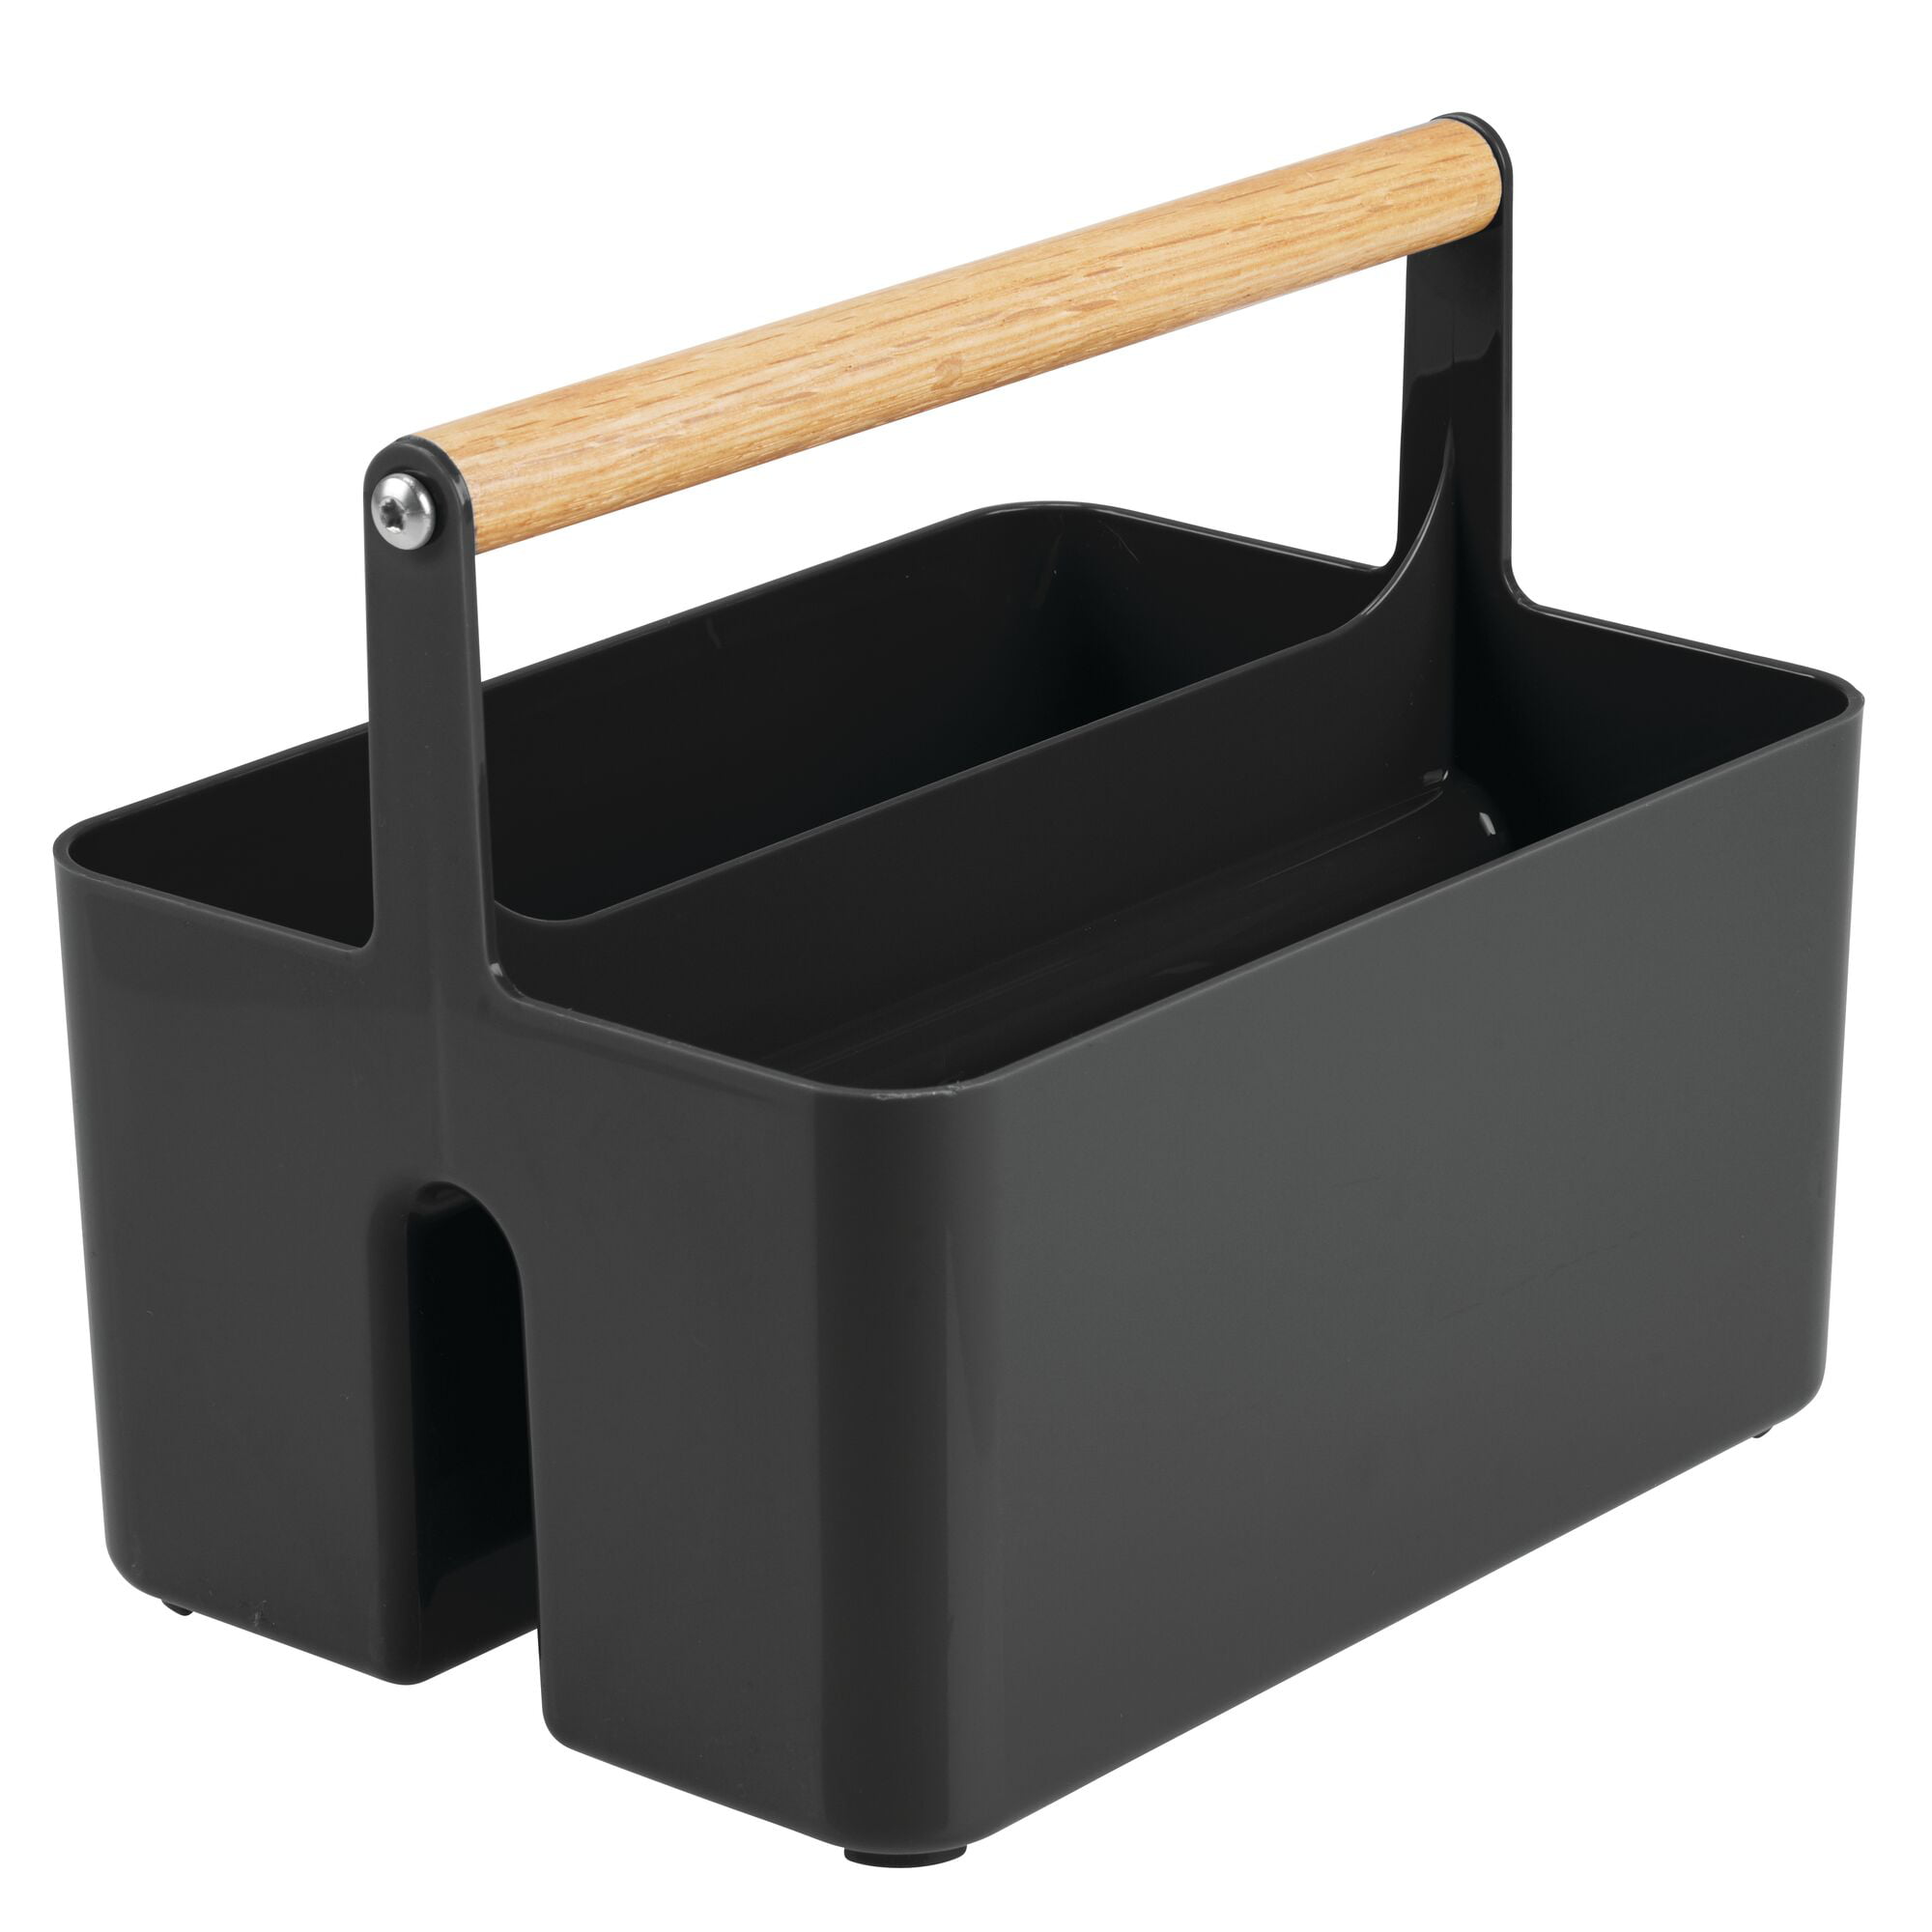 Genema Portable Storage Basket Cleaning Caddy Storage Organizer Tote with Handle for Laundry Bathroom Storage Baskets, Size: One size, Gray